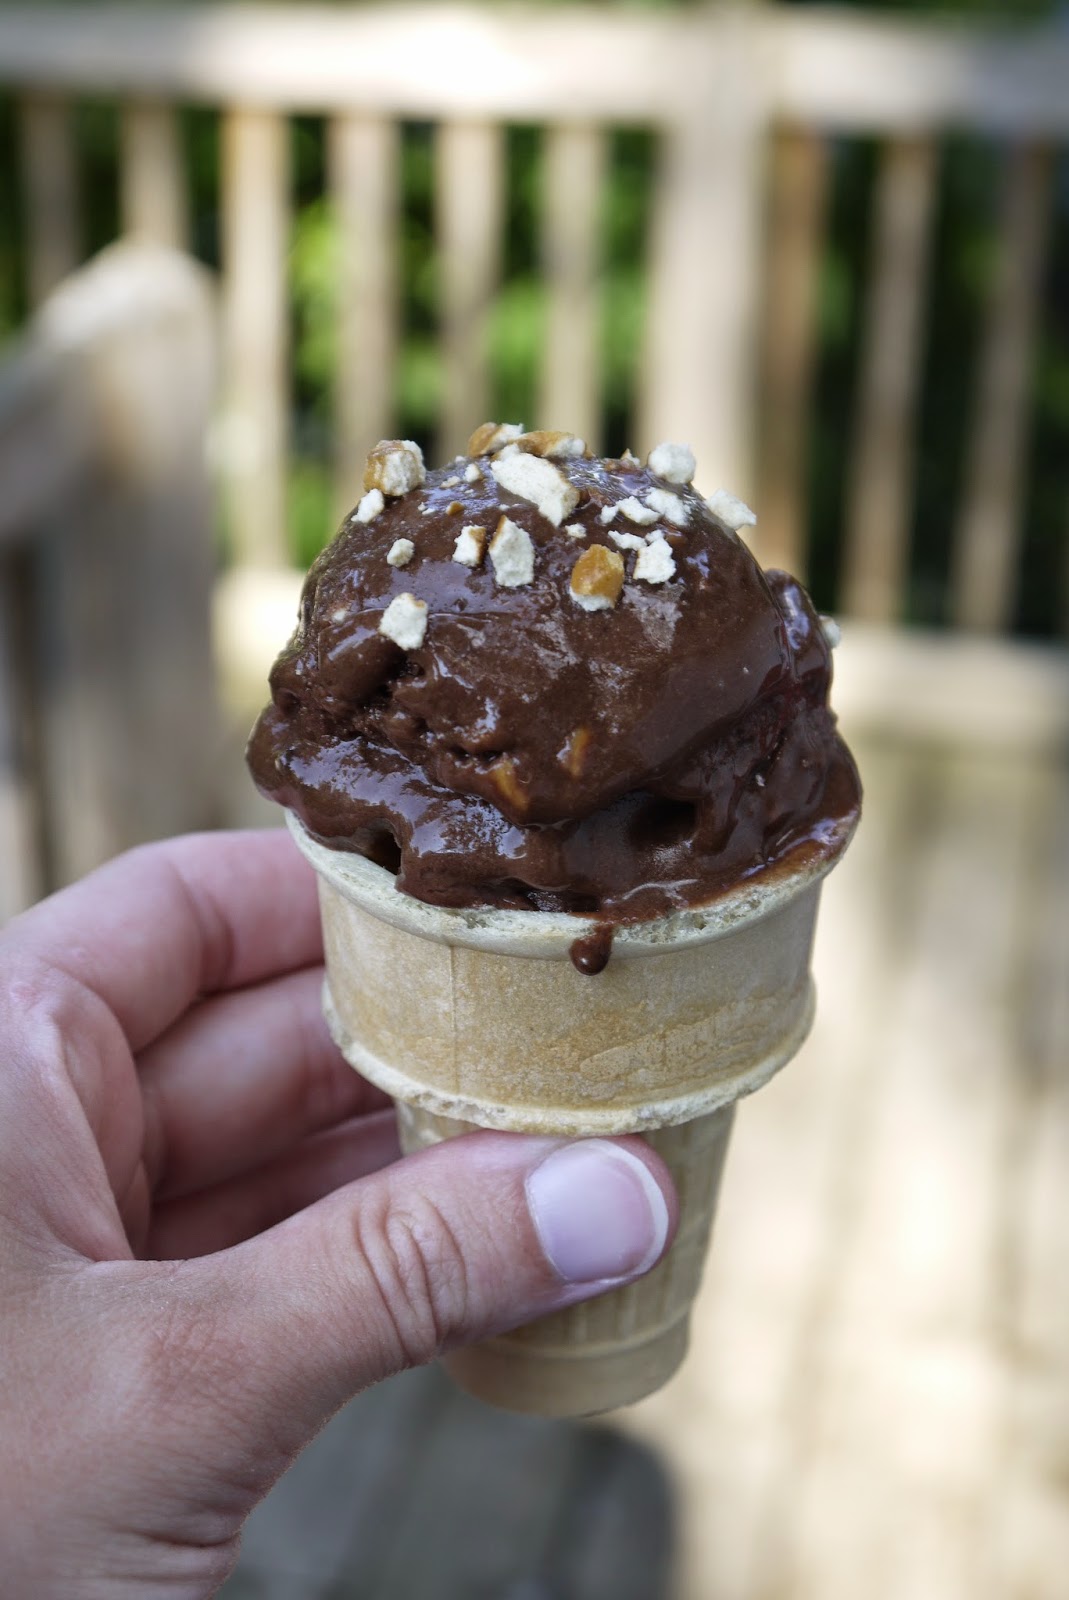 Chocolate ice cream in a cone